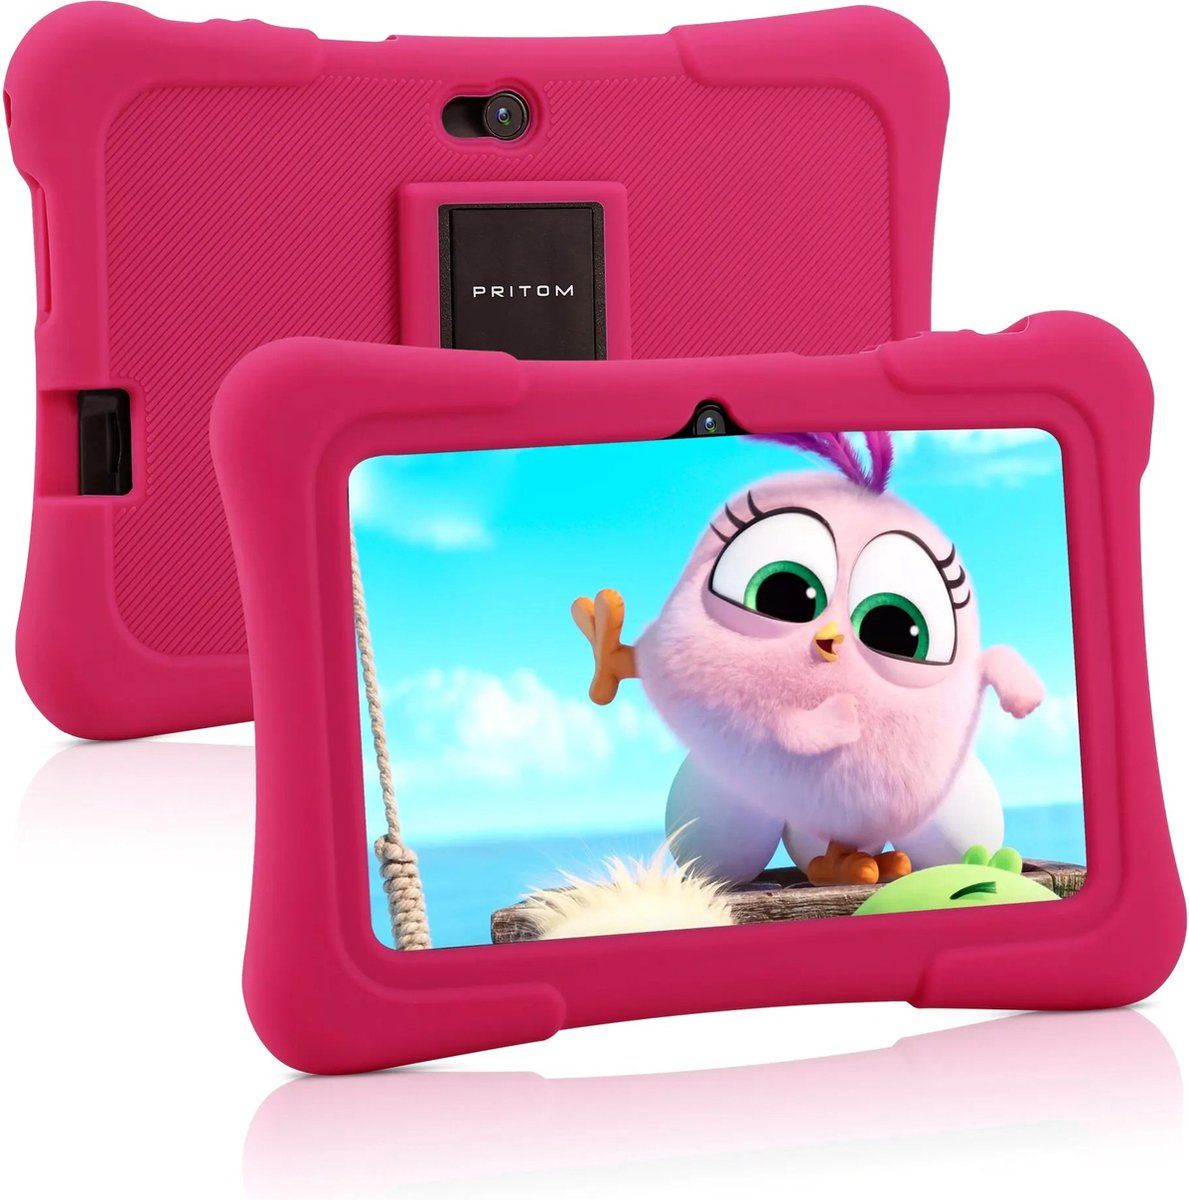 Homesell - PRITOM Kindertablet - Tablet - 7 Inch - 2023 model - Android 10.0 - Langdurig gebruik - Kids Proof - 32GB - Kindertablet vanaf 3 jaar - Kinder Tablet - Gratis Beschermende Hoes - Roze